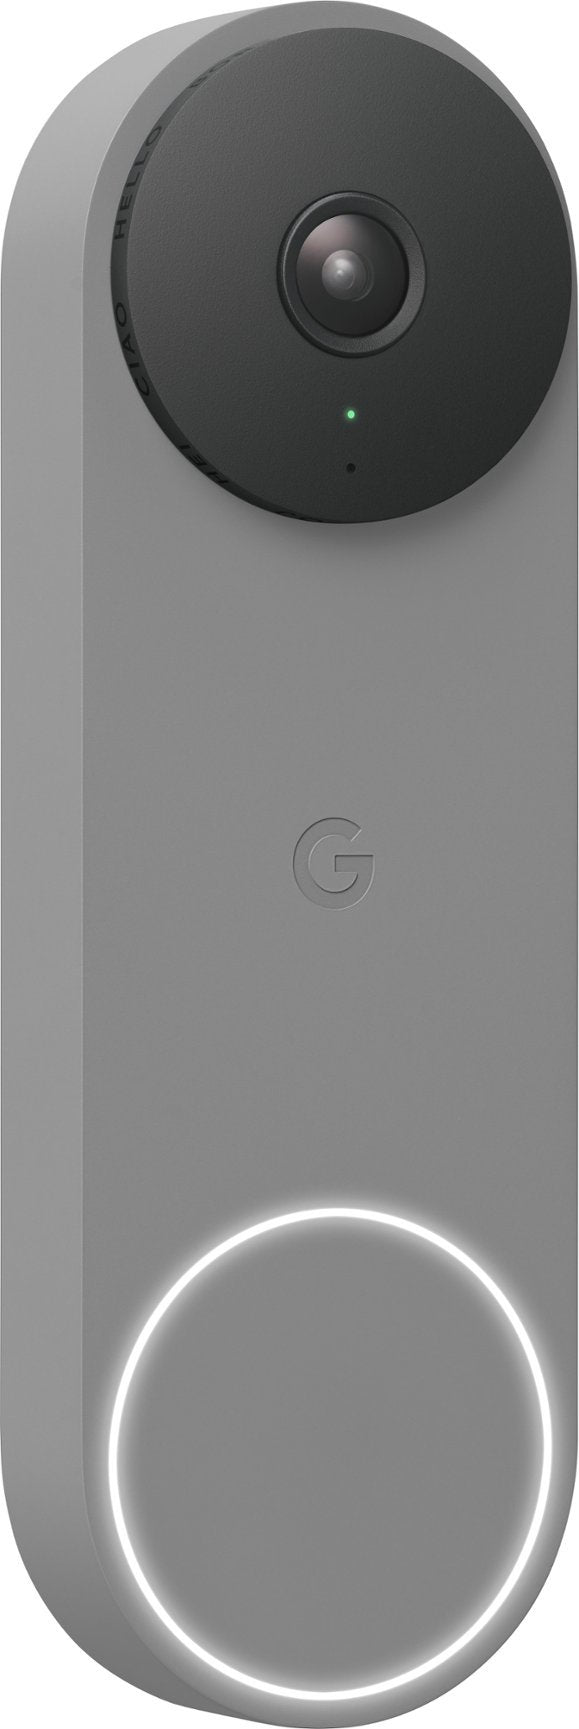 Google Nest Wired Doorbell 720p (2nd Gen) Video Security Camera - Ash (Certified Refurbished)